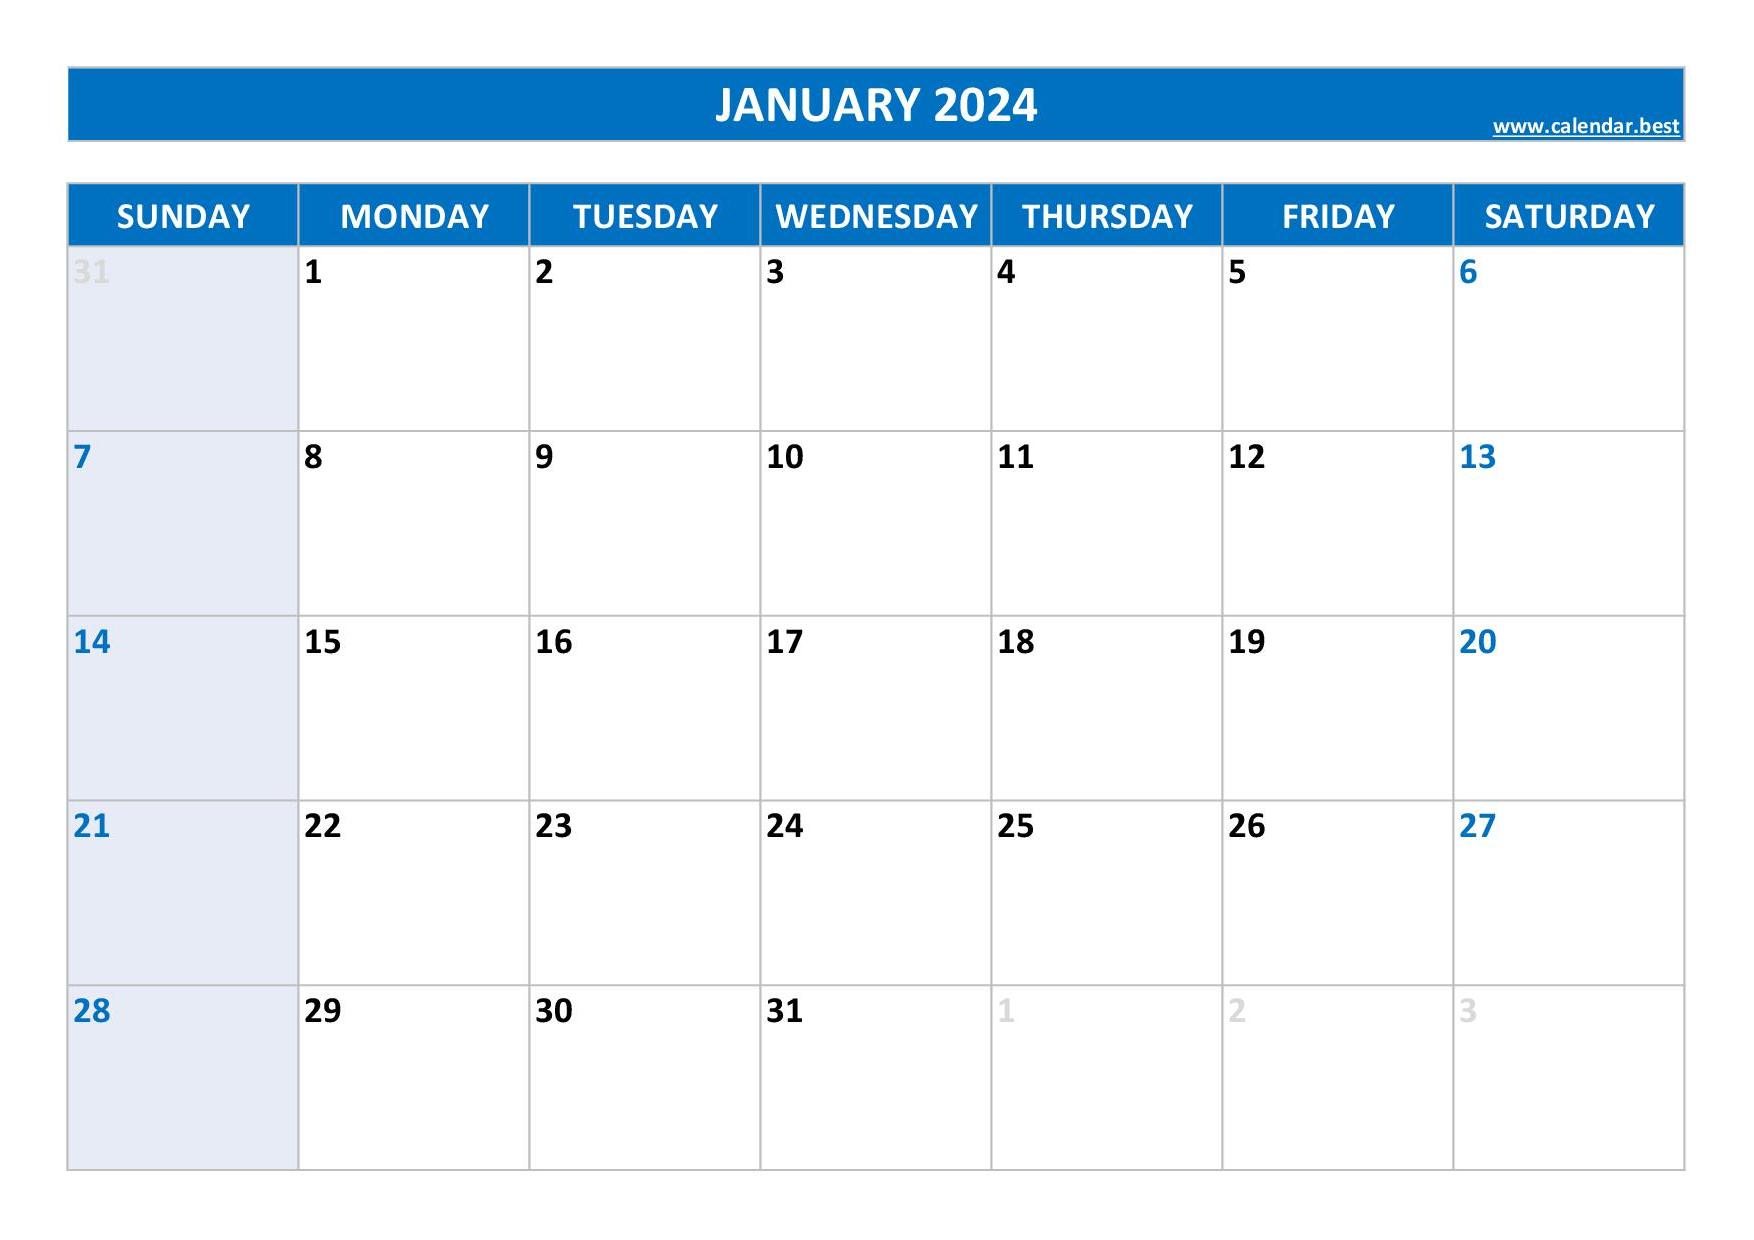 january-2024-calendar-calendar-best